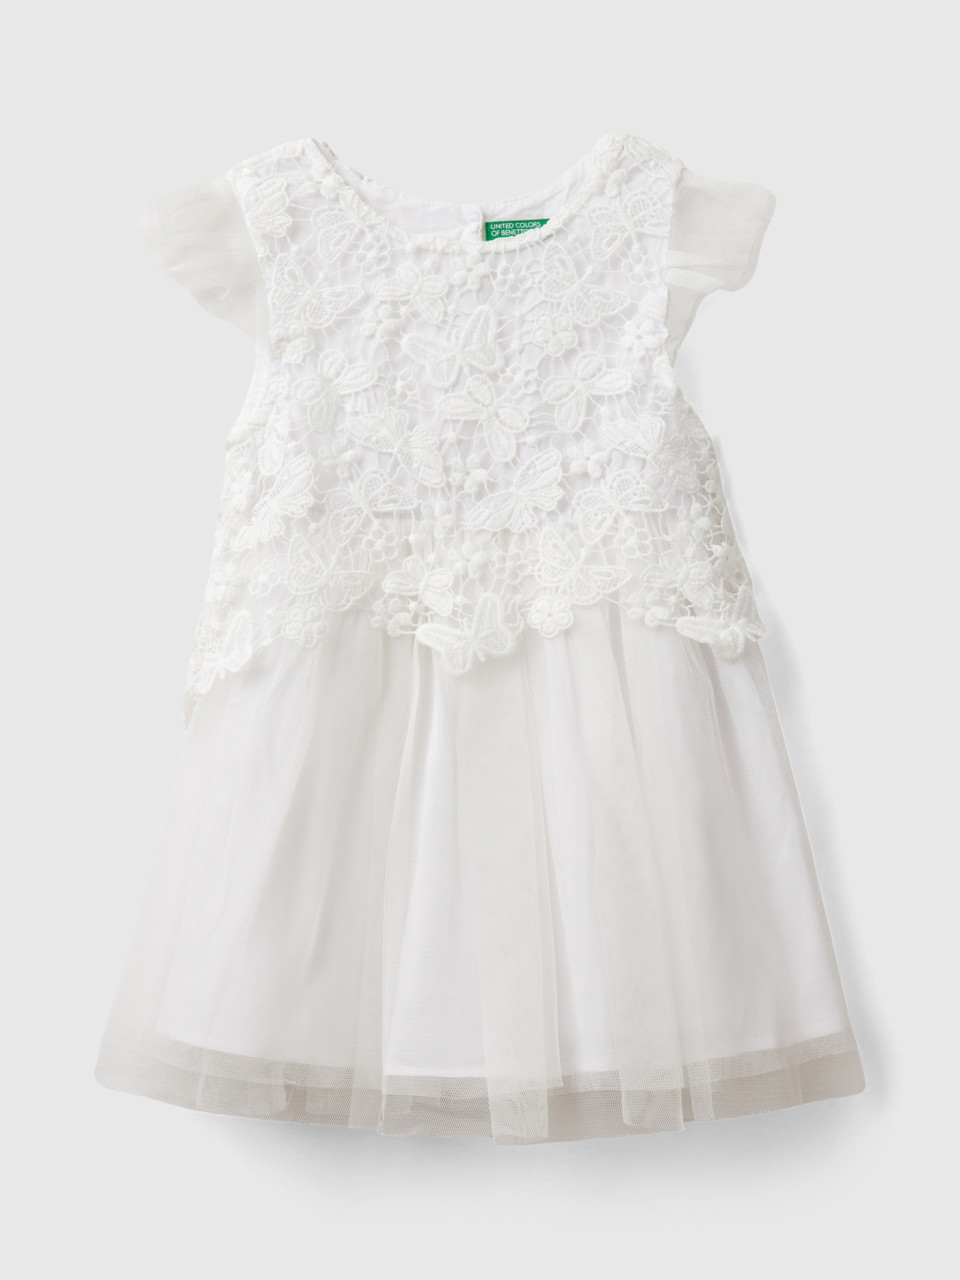 Benetton, Tulle And Macramé Dress, White, Kids